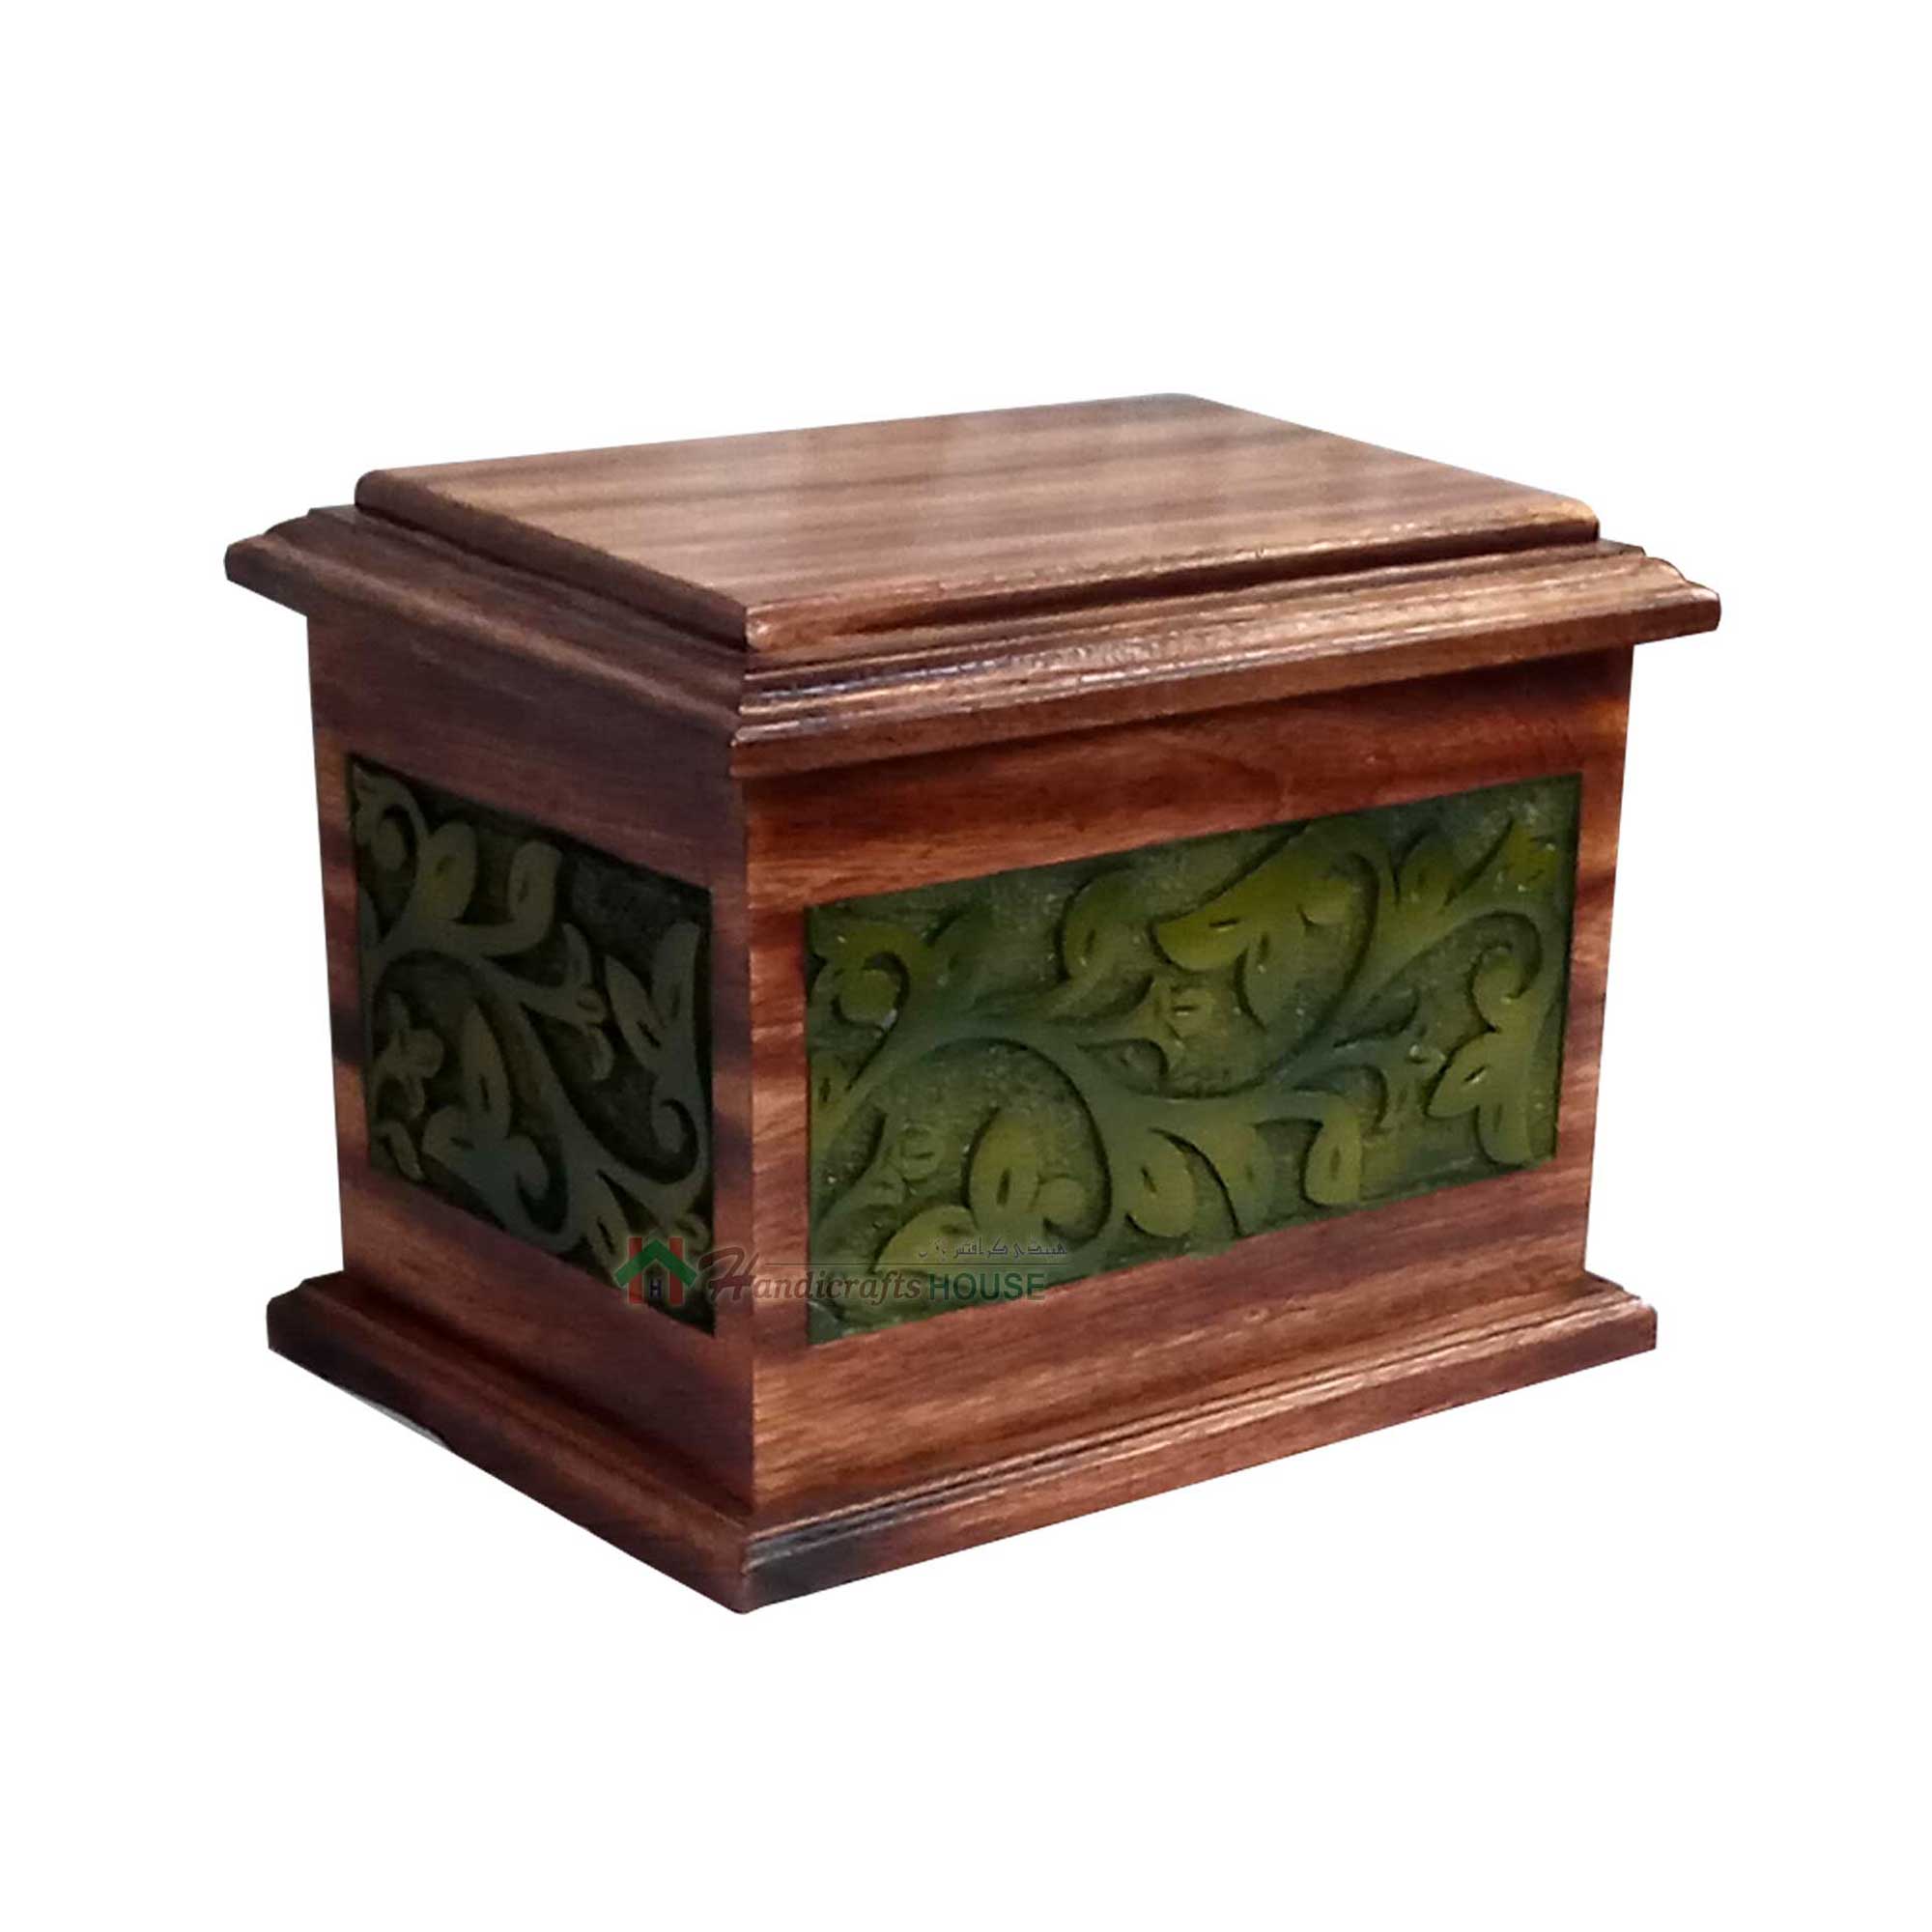 Wood Cremation Urns For Sale, Wooden Decorative Tableware, Timber Keepsake Urn